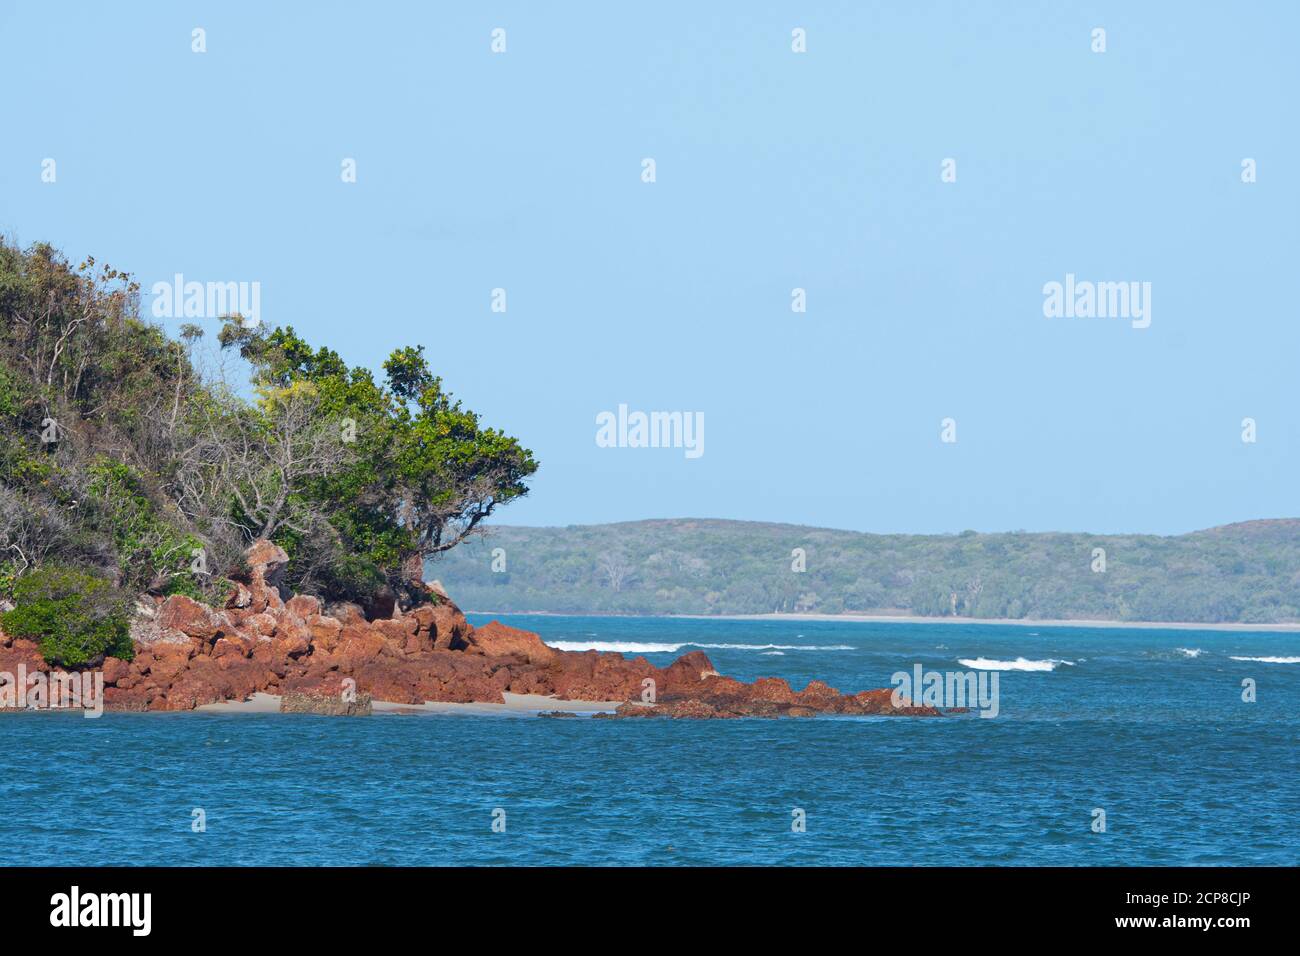 Scenic view of the coastline at Daliwuy Bay (Binydjarrnga), East Arnhem Land, Northern Territory, NT, Australia Stock Photo